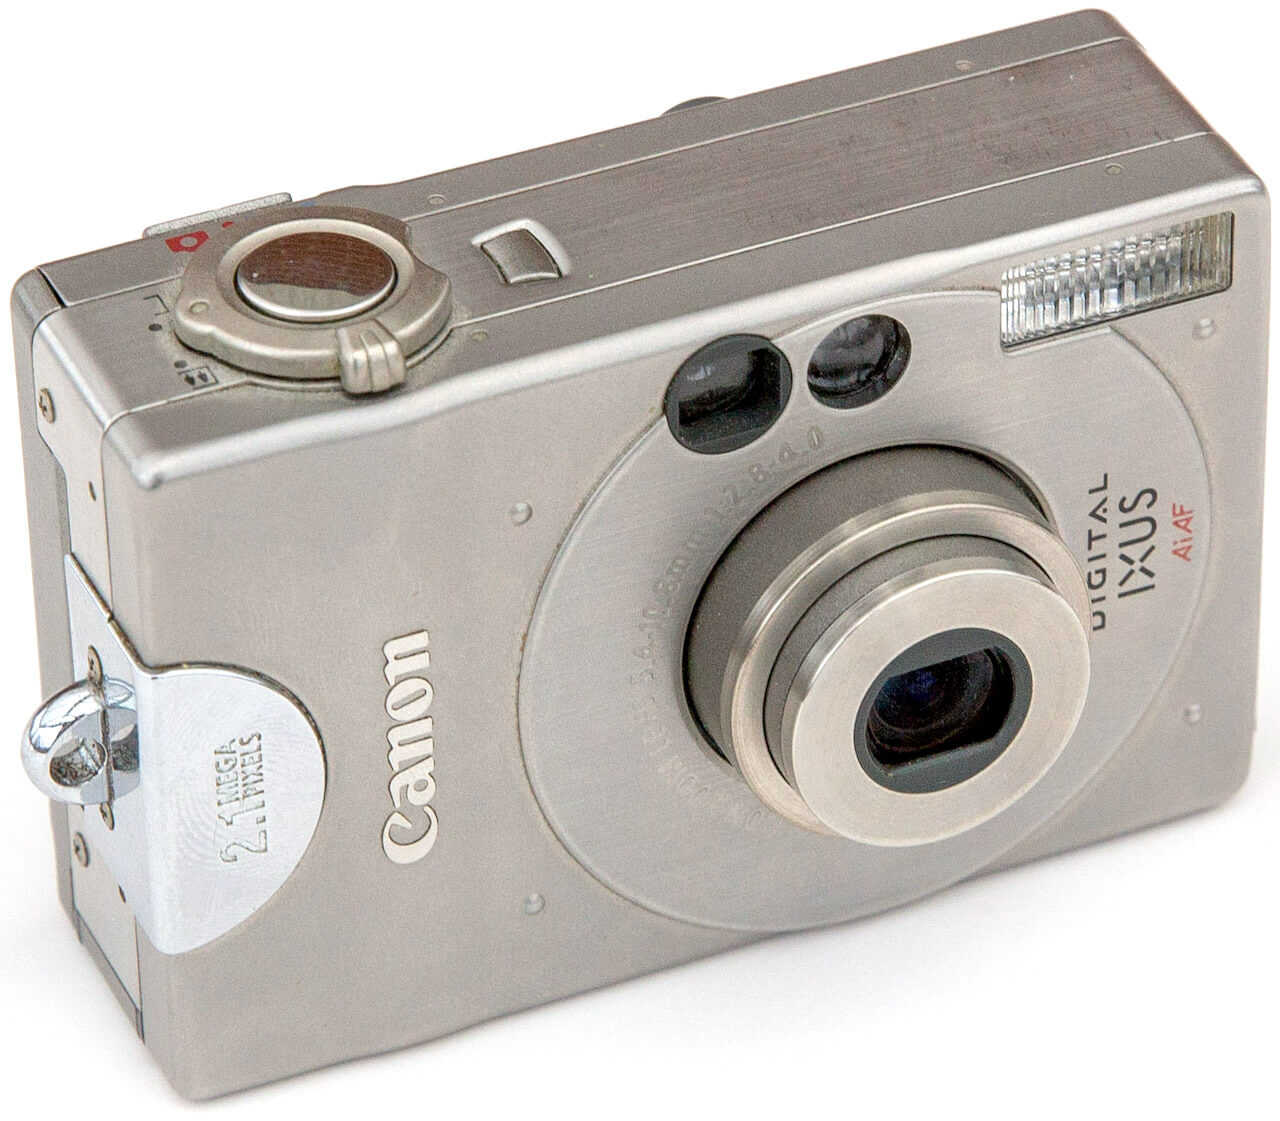 My first digital camera, the Canon Digital Ixus. (17-1)